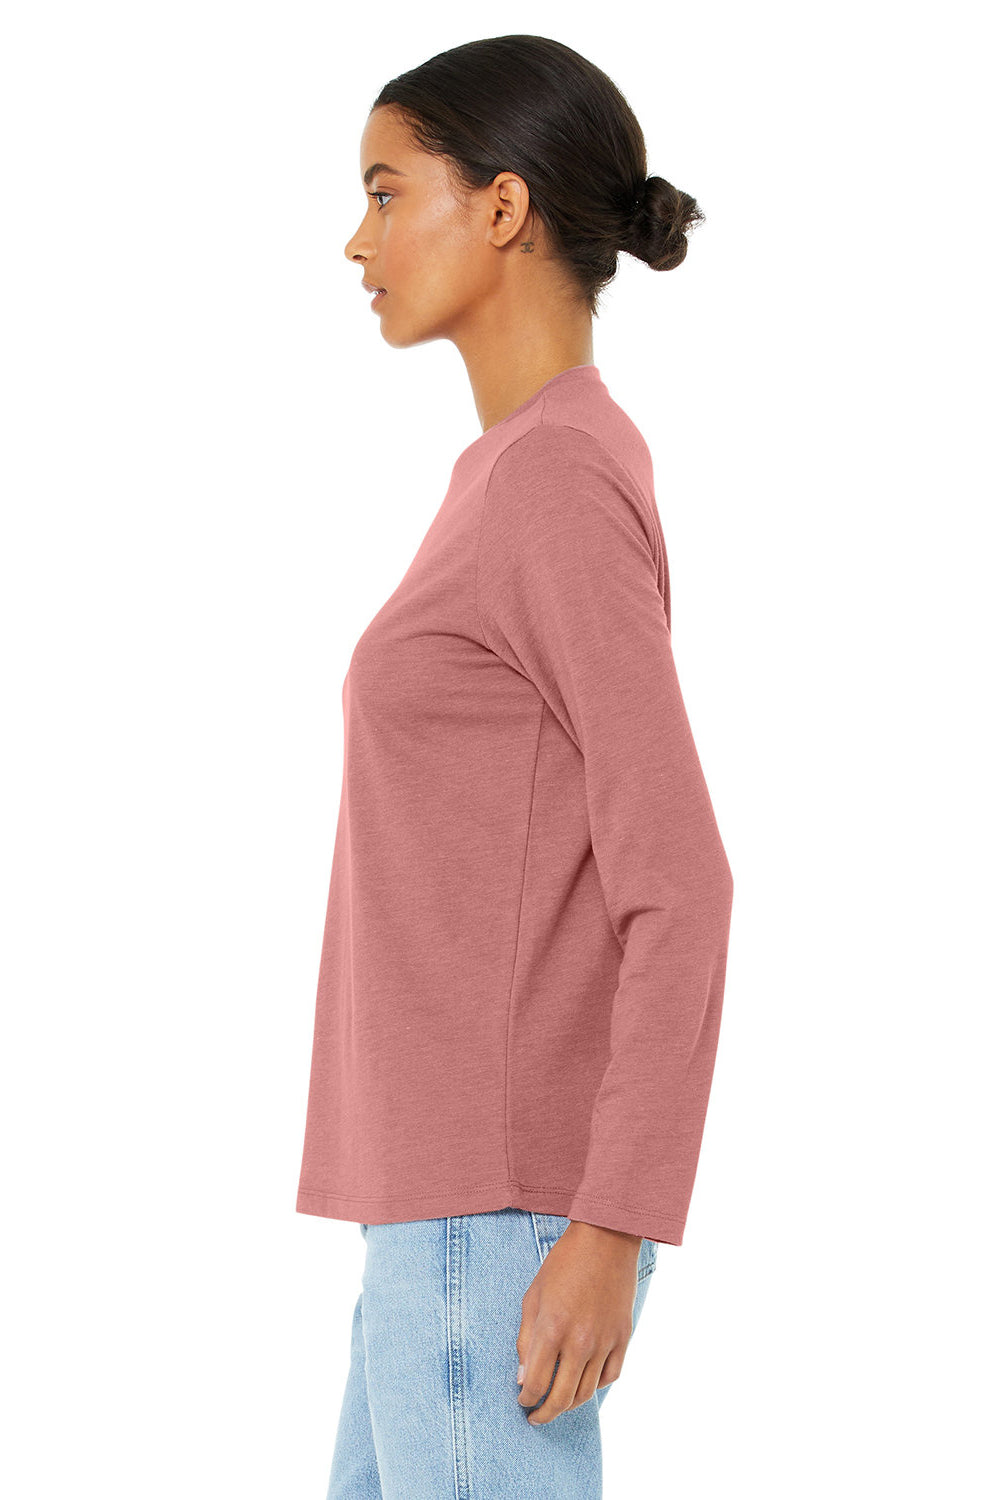 Bella + Canvas B6500/6500 Womens Jersey Long Sleeve Crewneck T-Shirt Heather Mauve Model Side